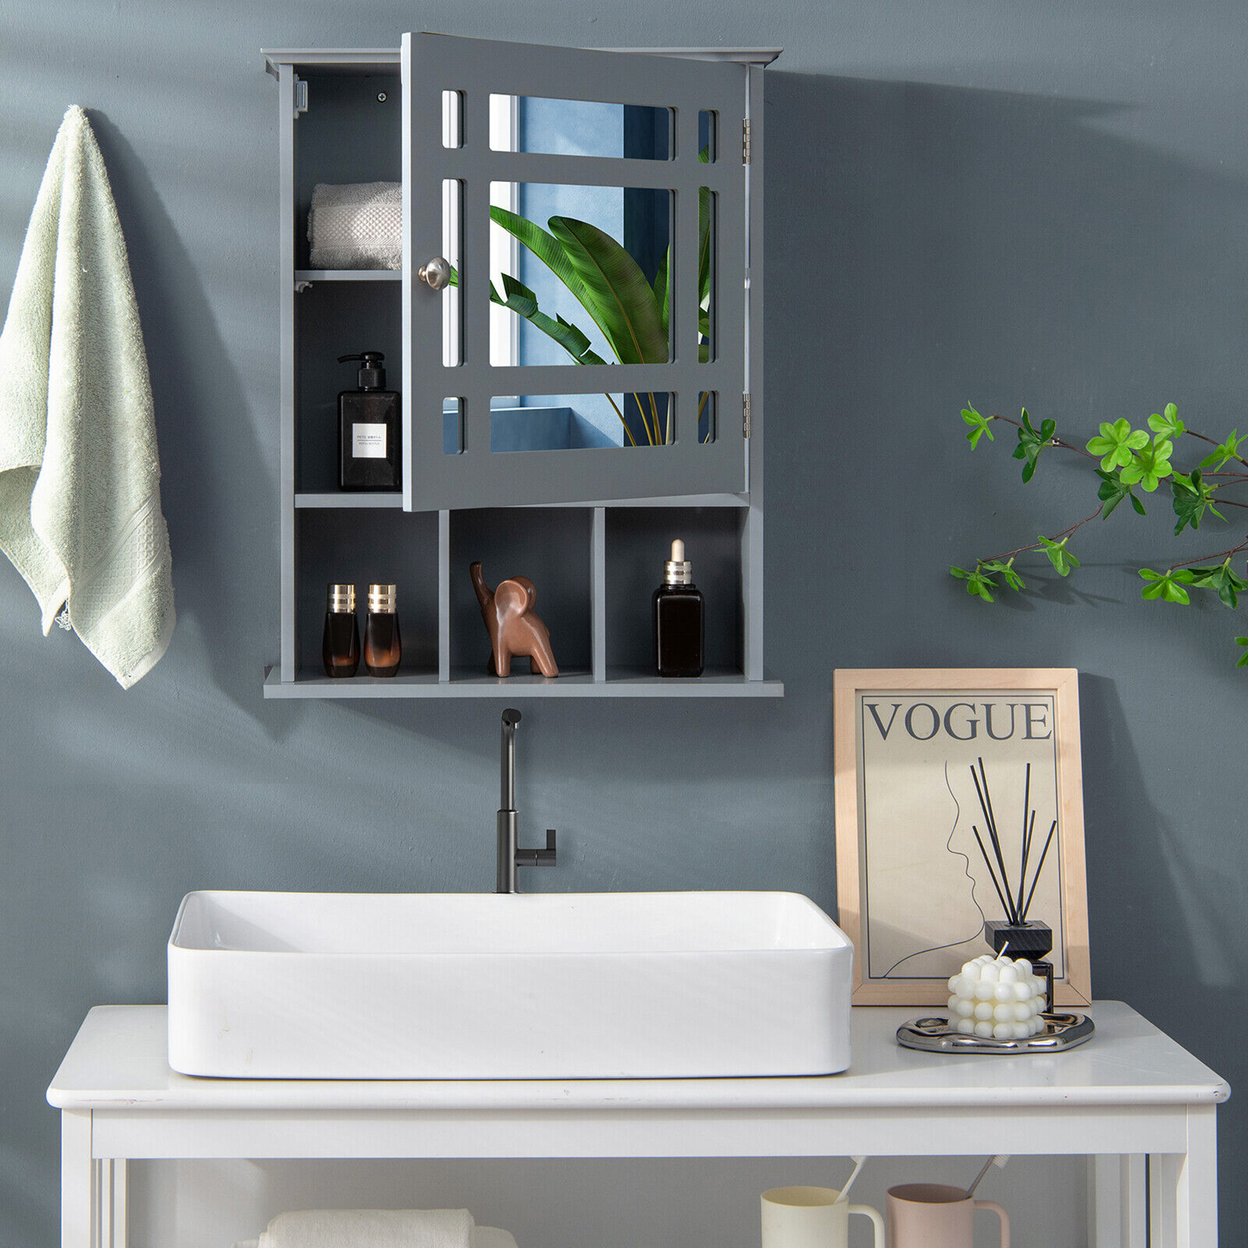 Mirrored Medicine Cabinet Bathroom Wall Mounted Storage W/Adjustable Shelf - Grey